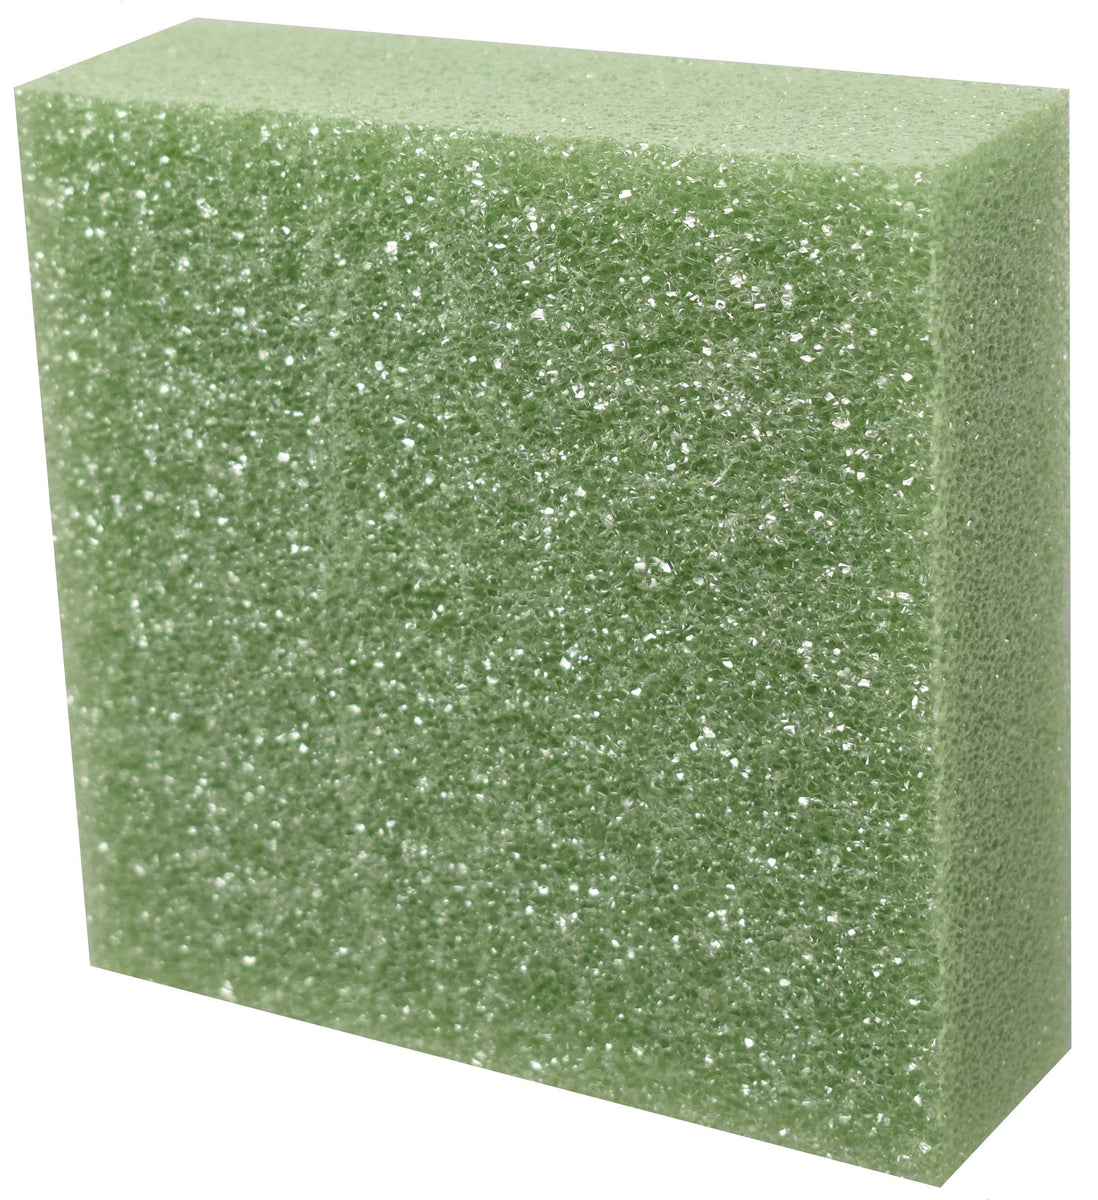 Six Foot Polyisocyanurate Foam Blocks - 2' x 4' x 6' Poly Block